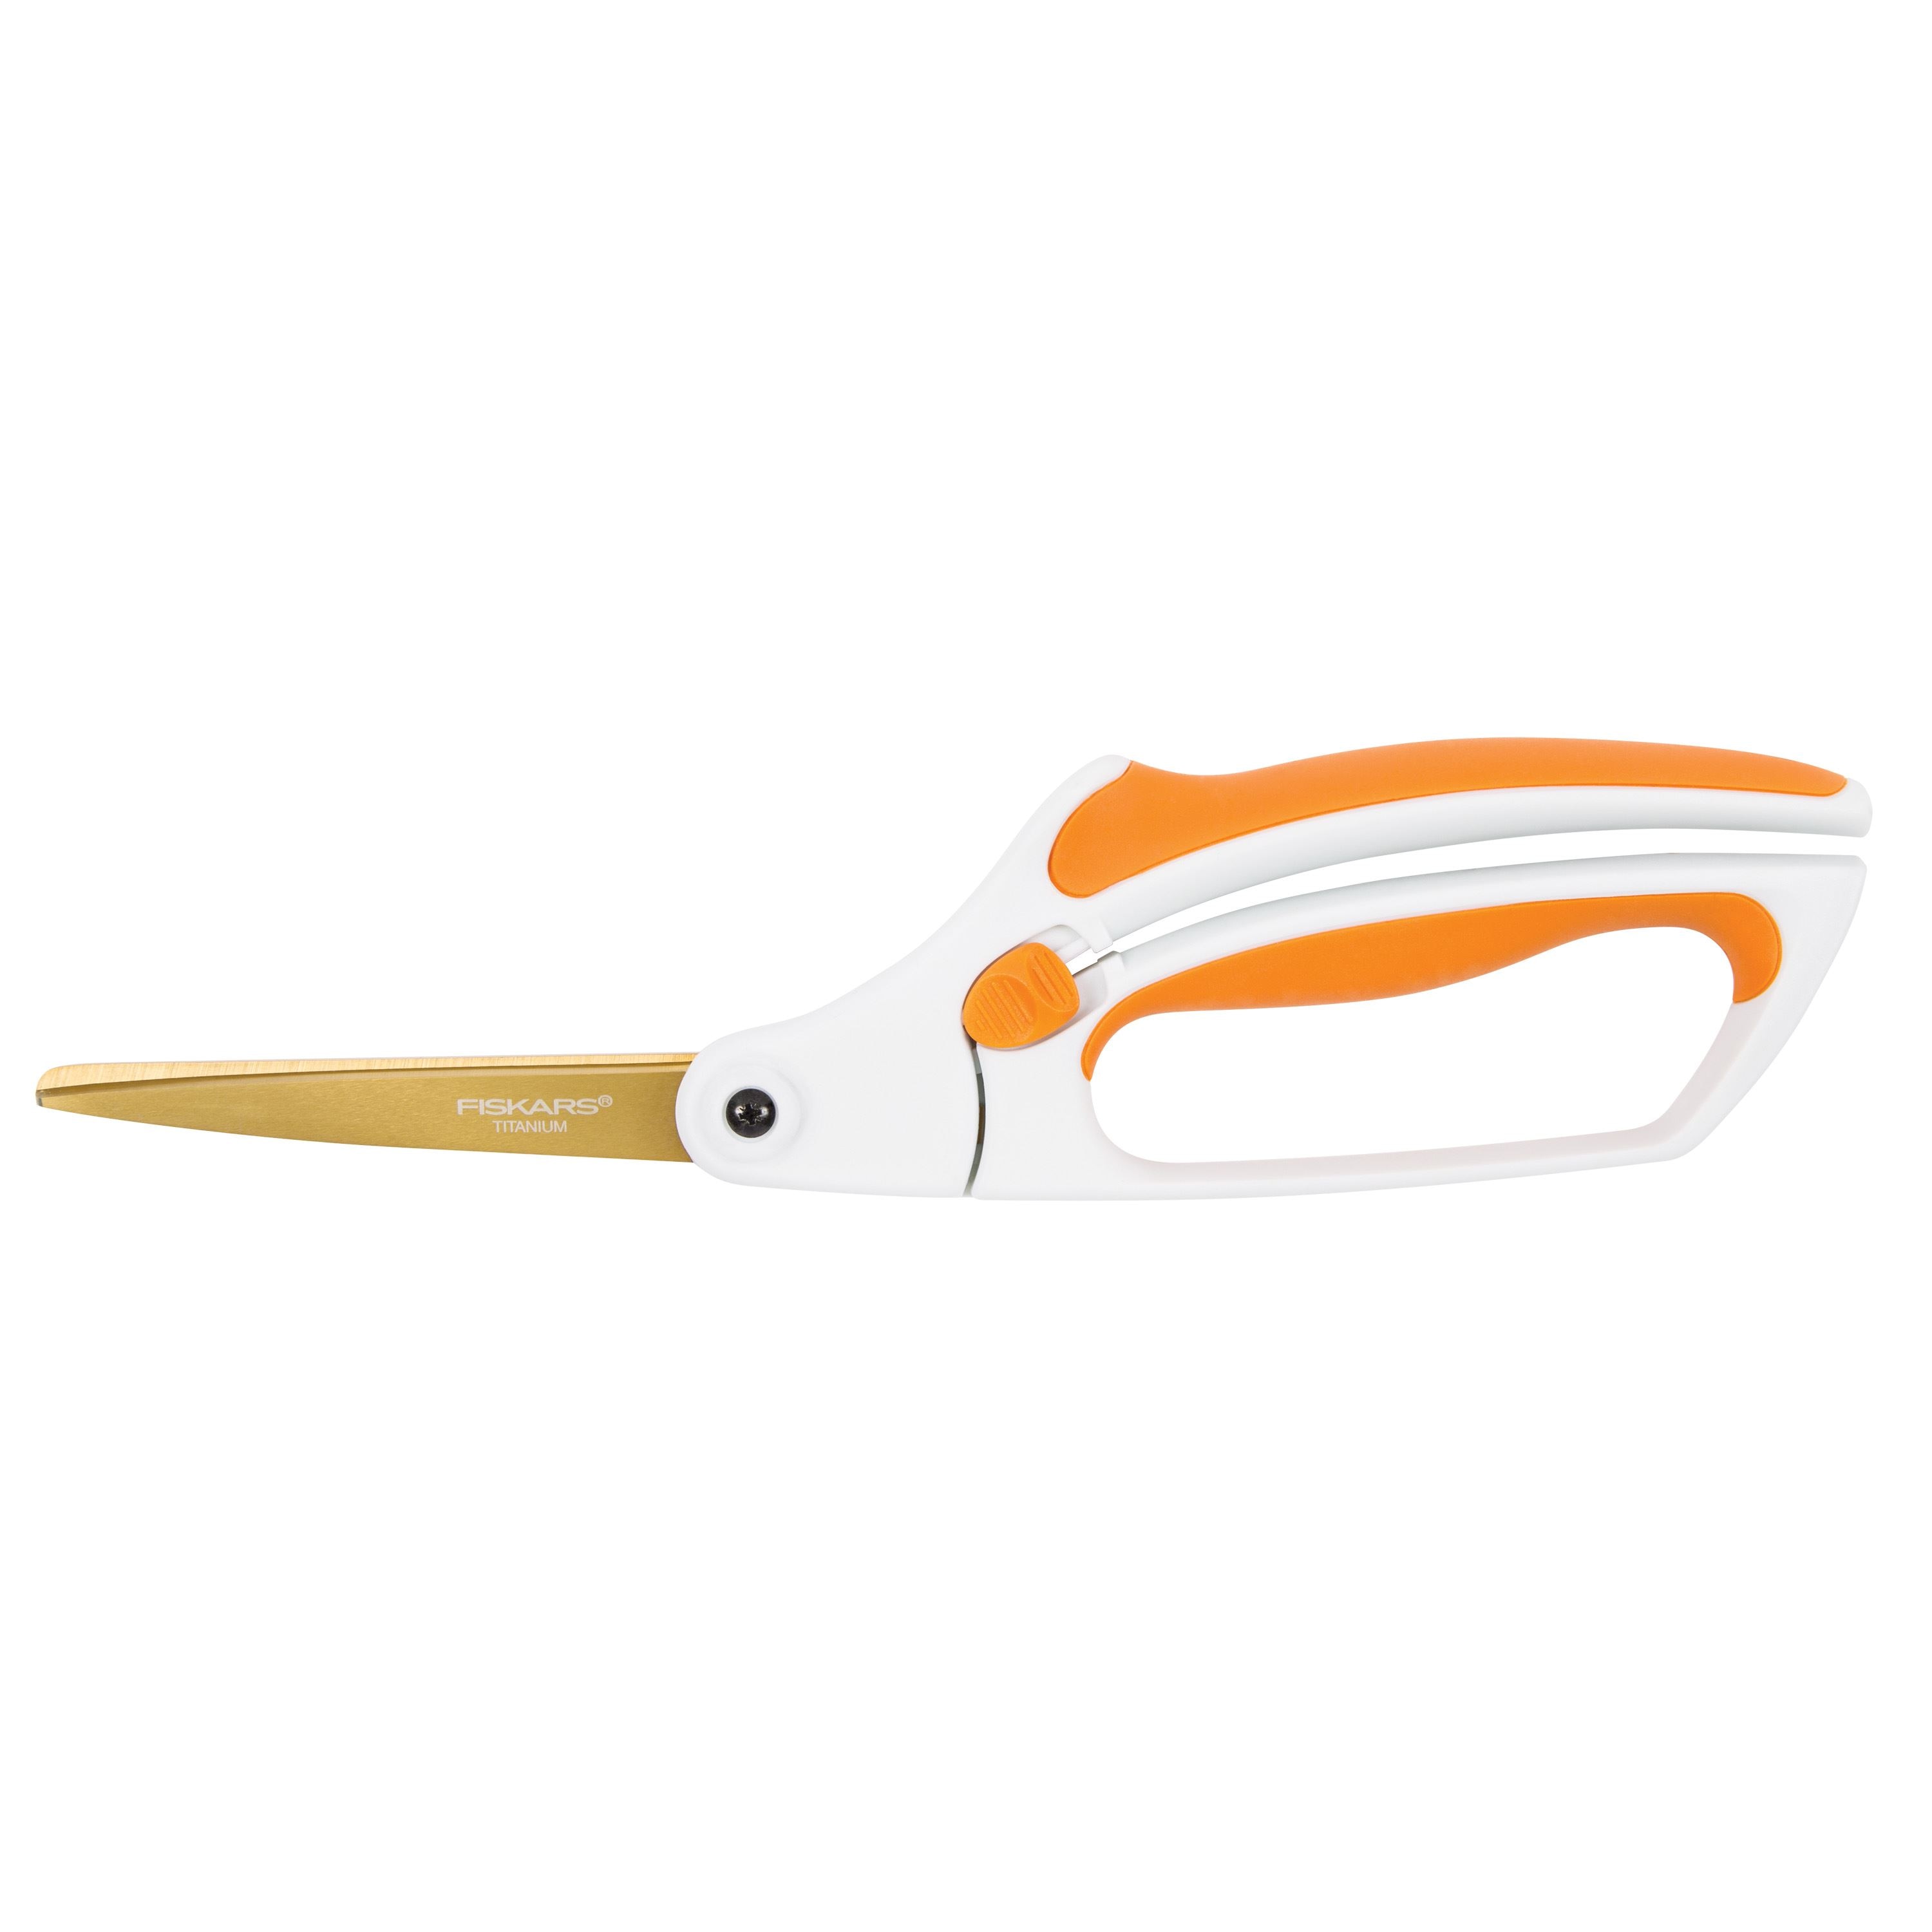 Spring Loaded Scissors - Easy Grip